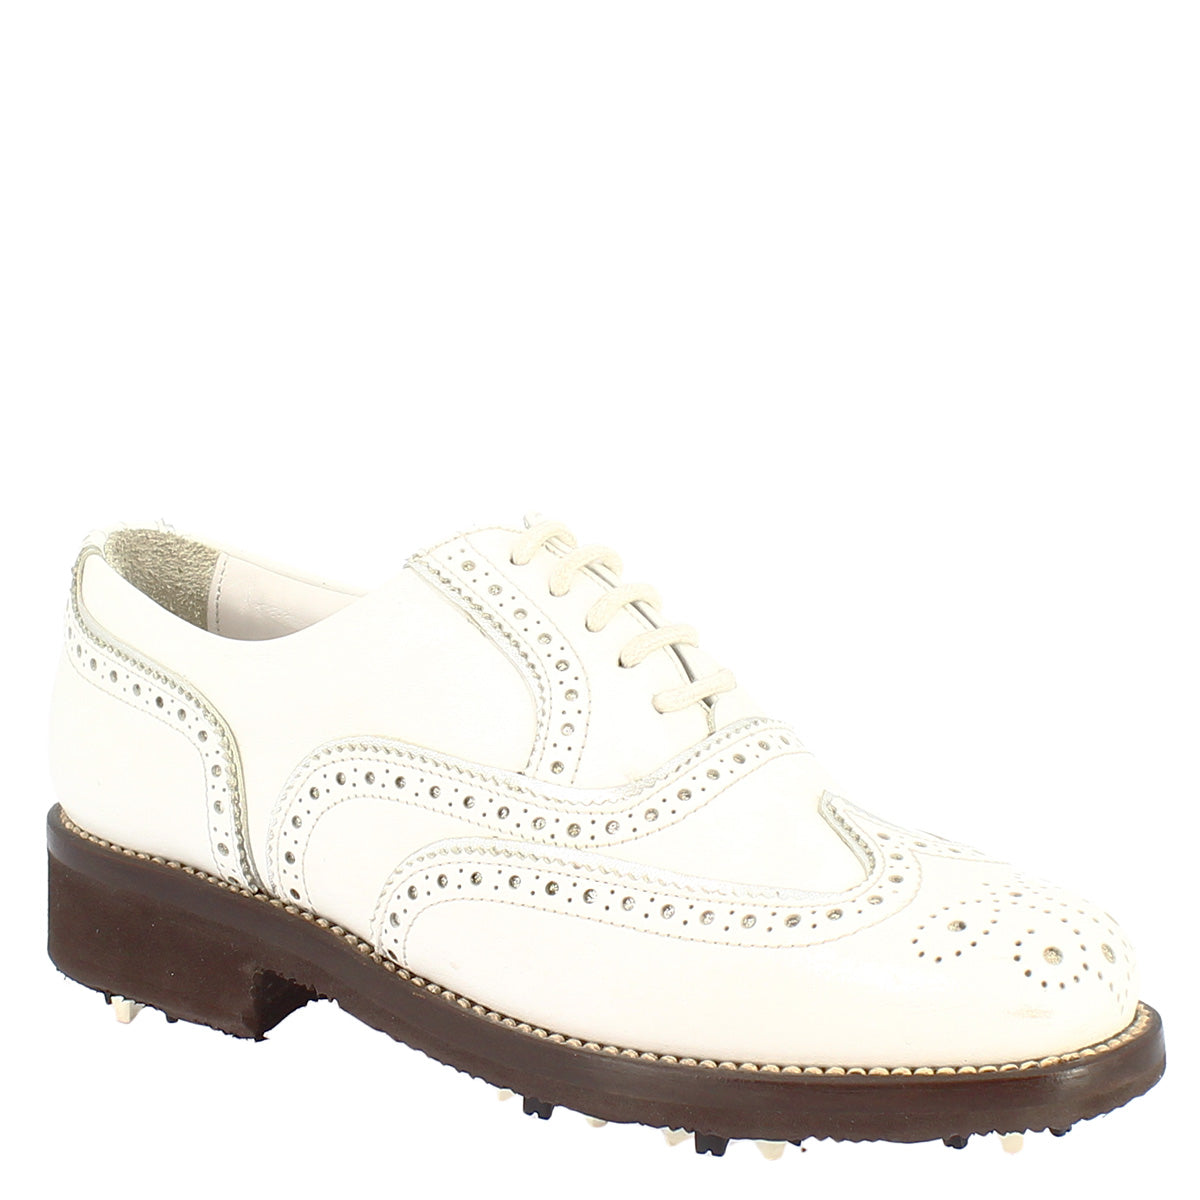 Handmade waterproof ladies golf shoes in white leather